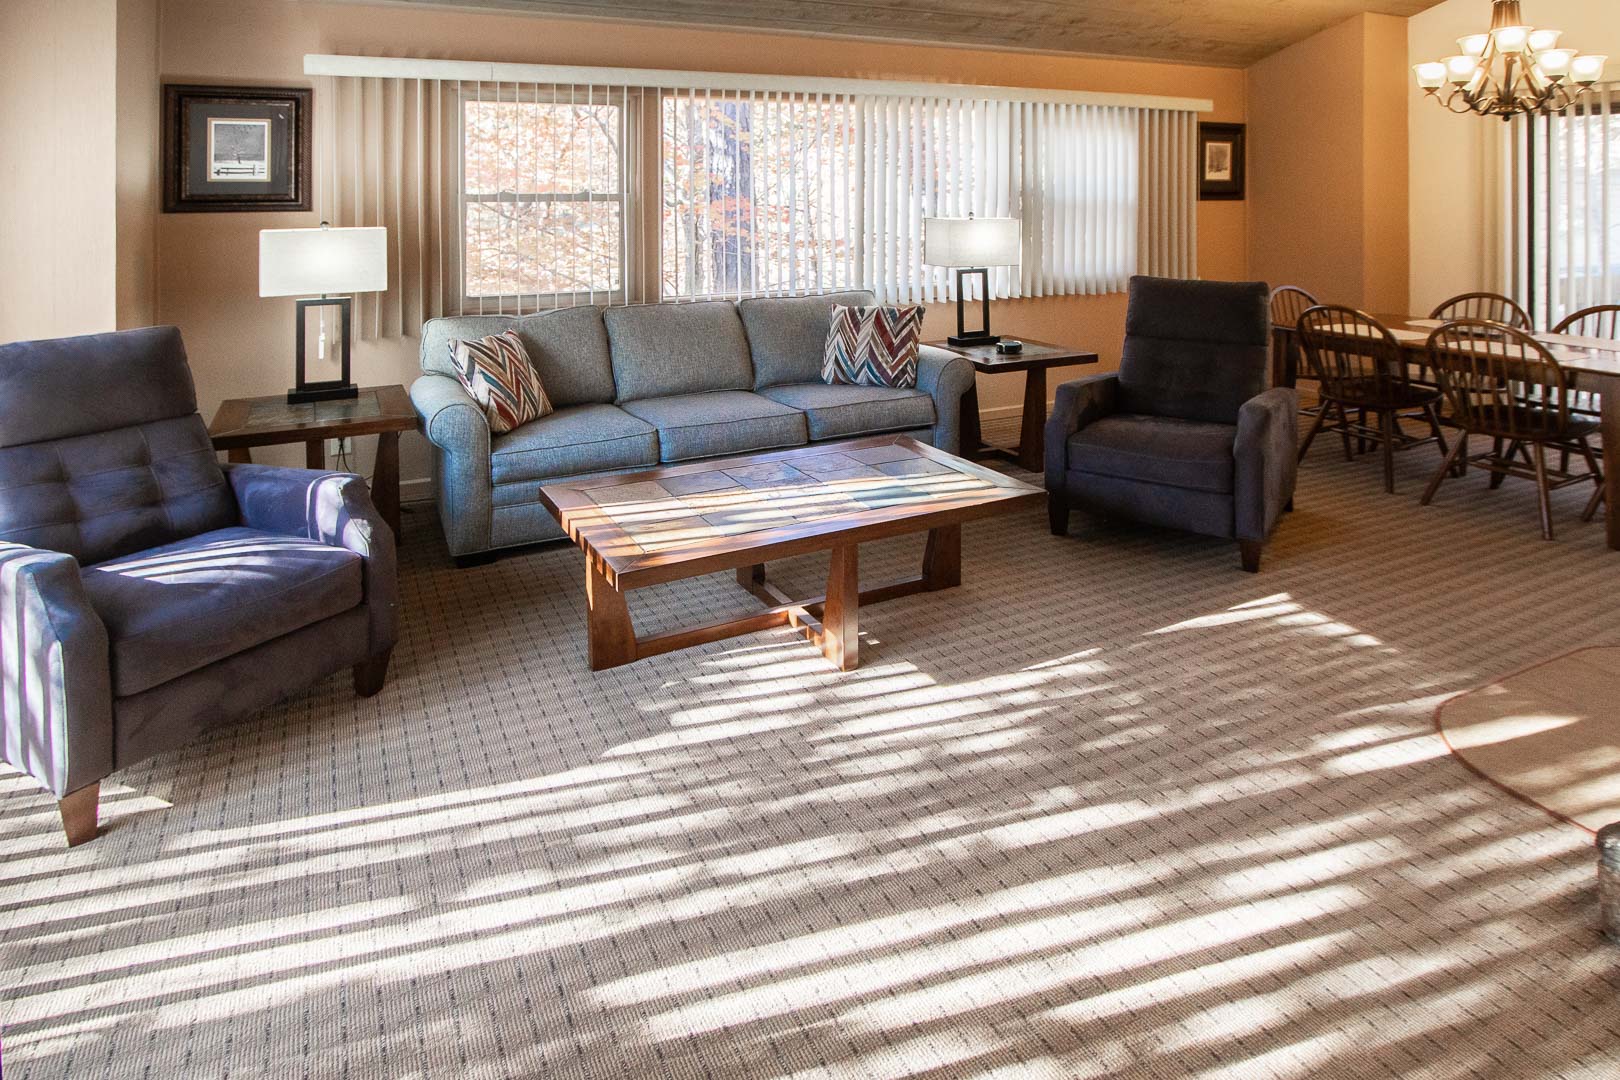 A spacious living room area at VRI's Fox Run Resort in North Carolina.